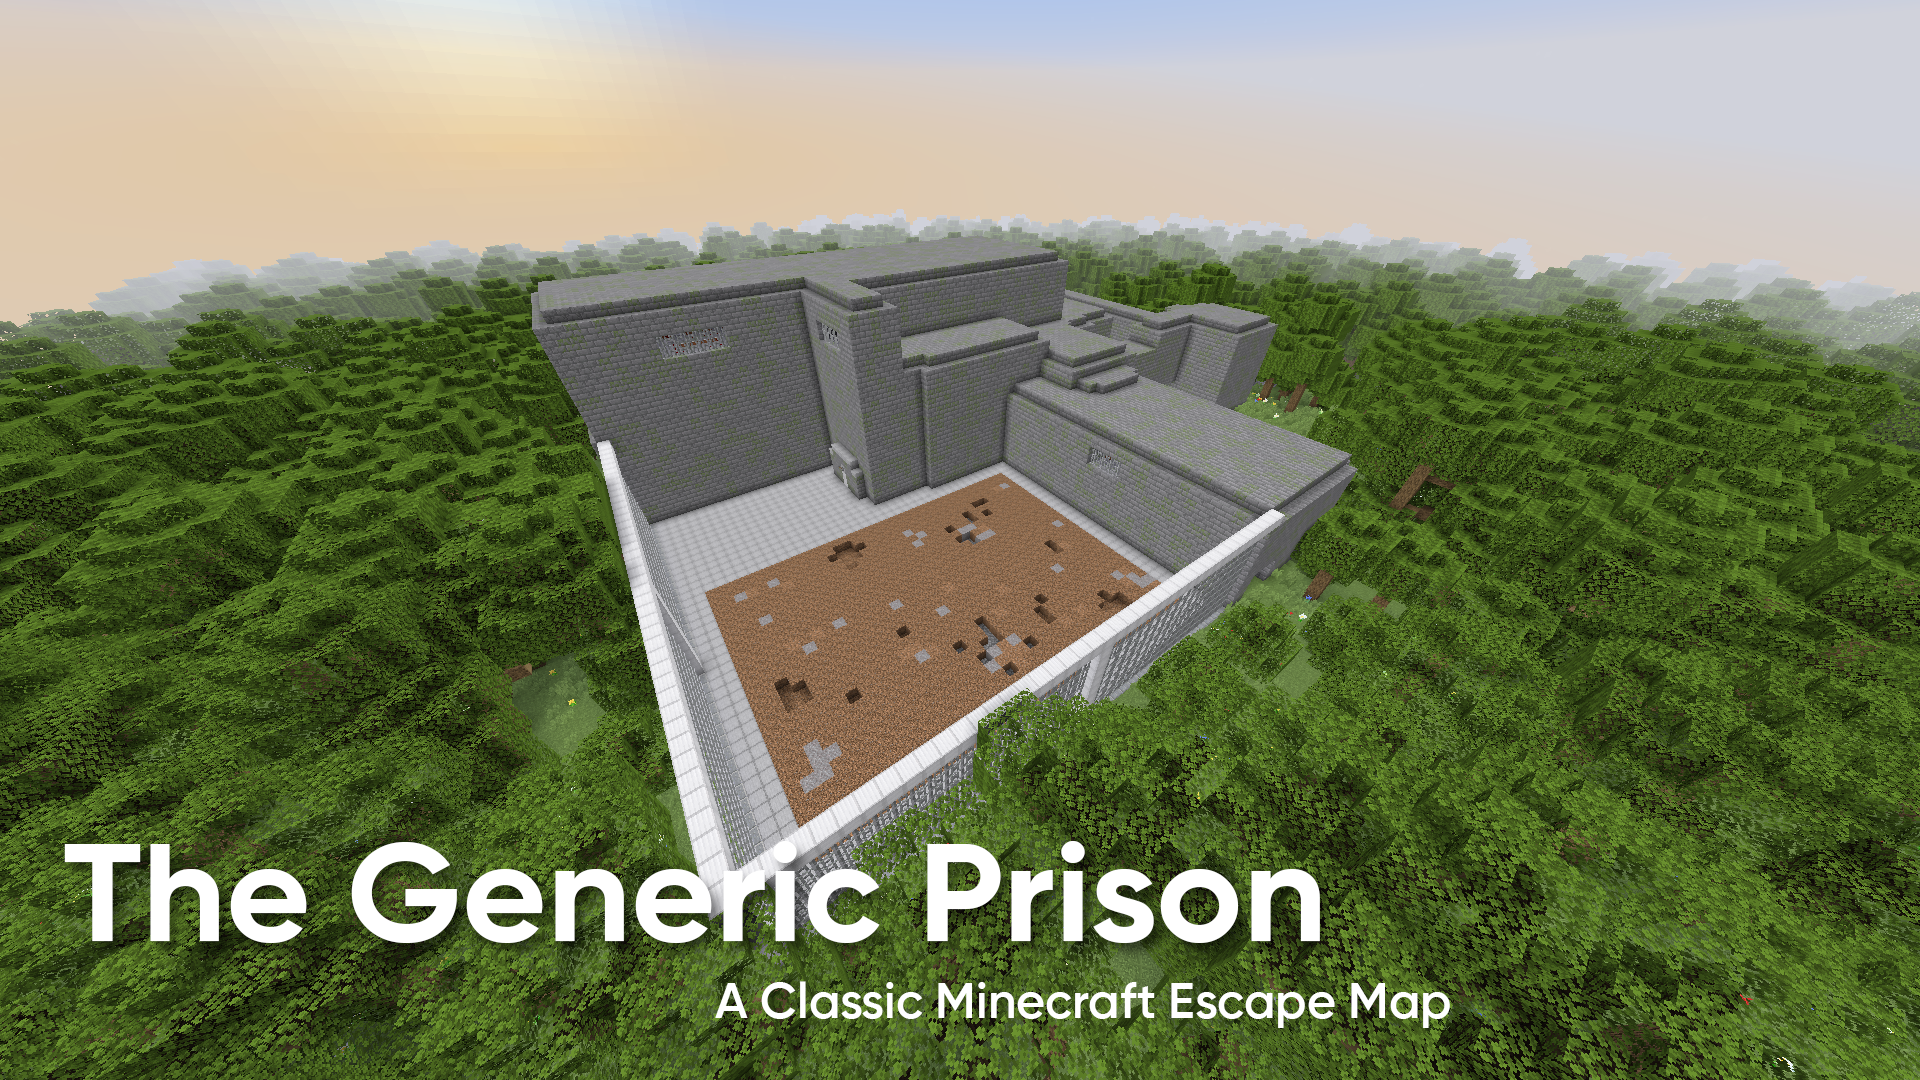 TOP 10 Prison Escape Maps For Minecraft, Free Download